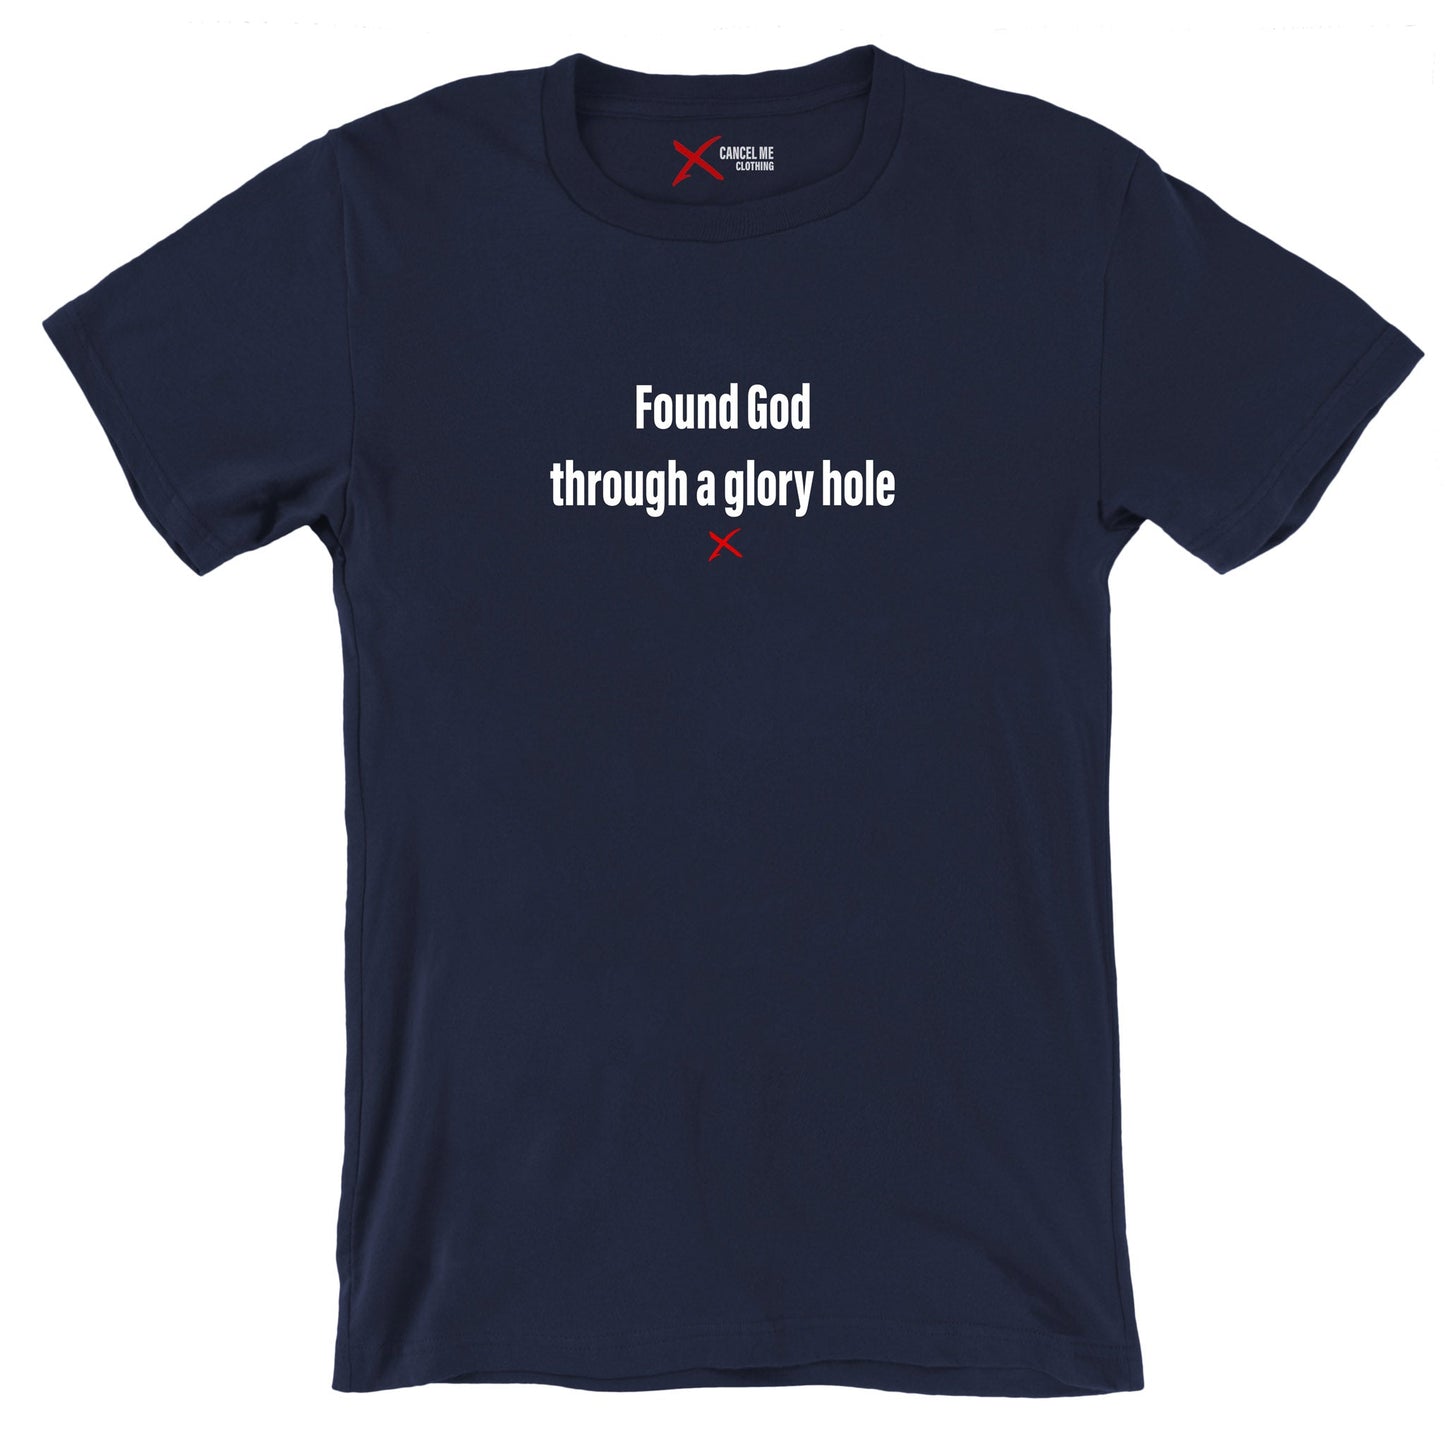 Found God through a glory hole - Shirt